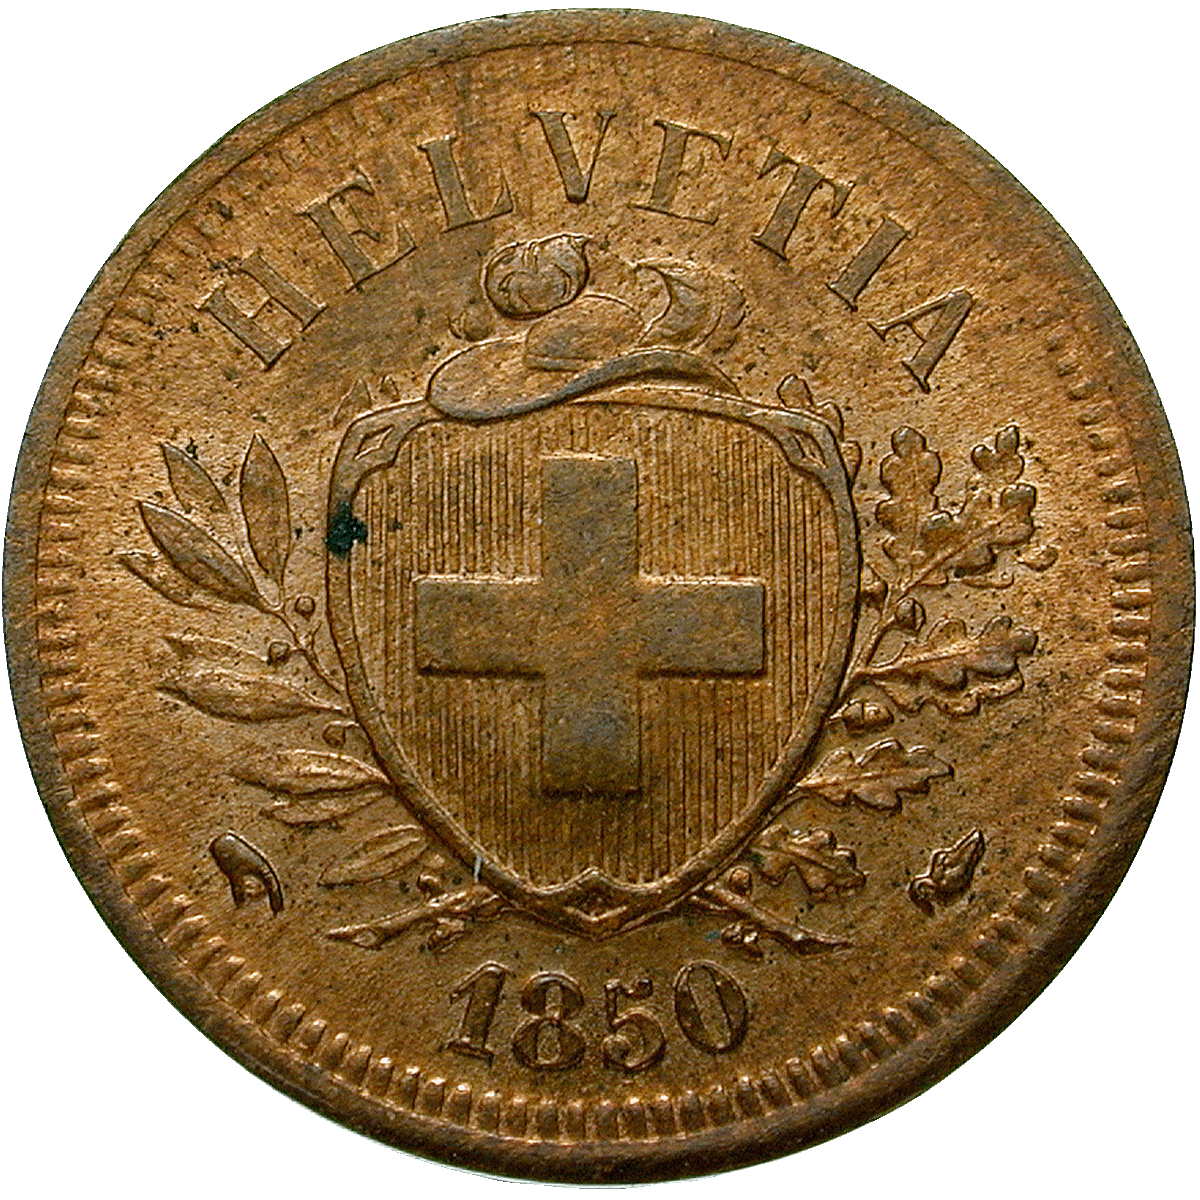 Swiss Confederation, 1 Rappen 1850 (obverse)